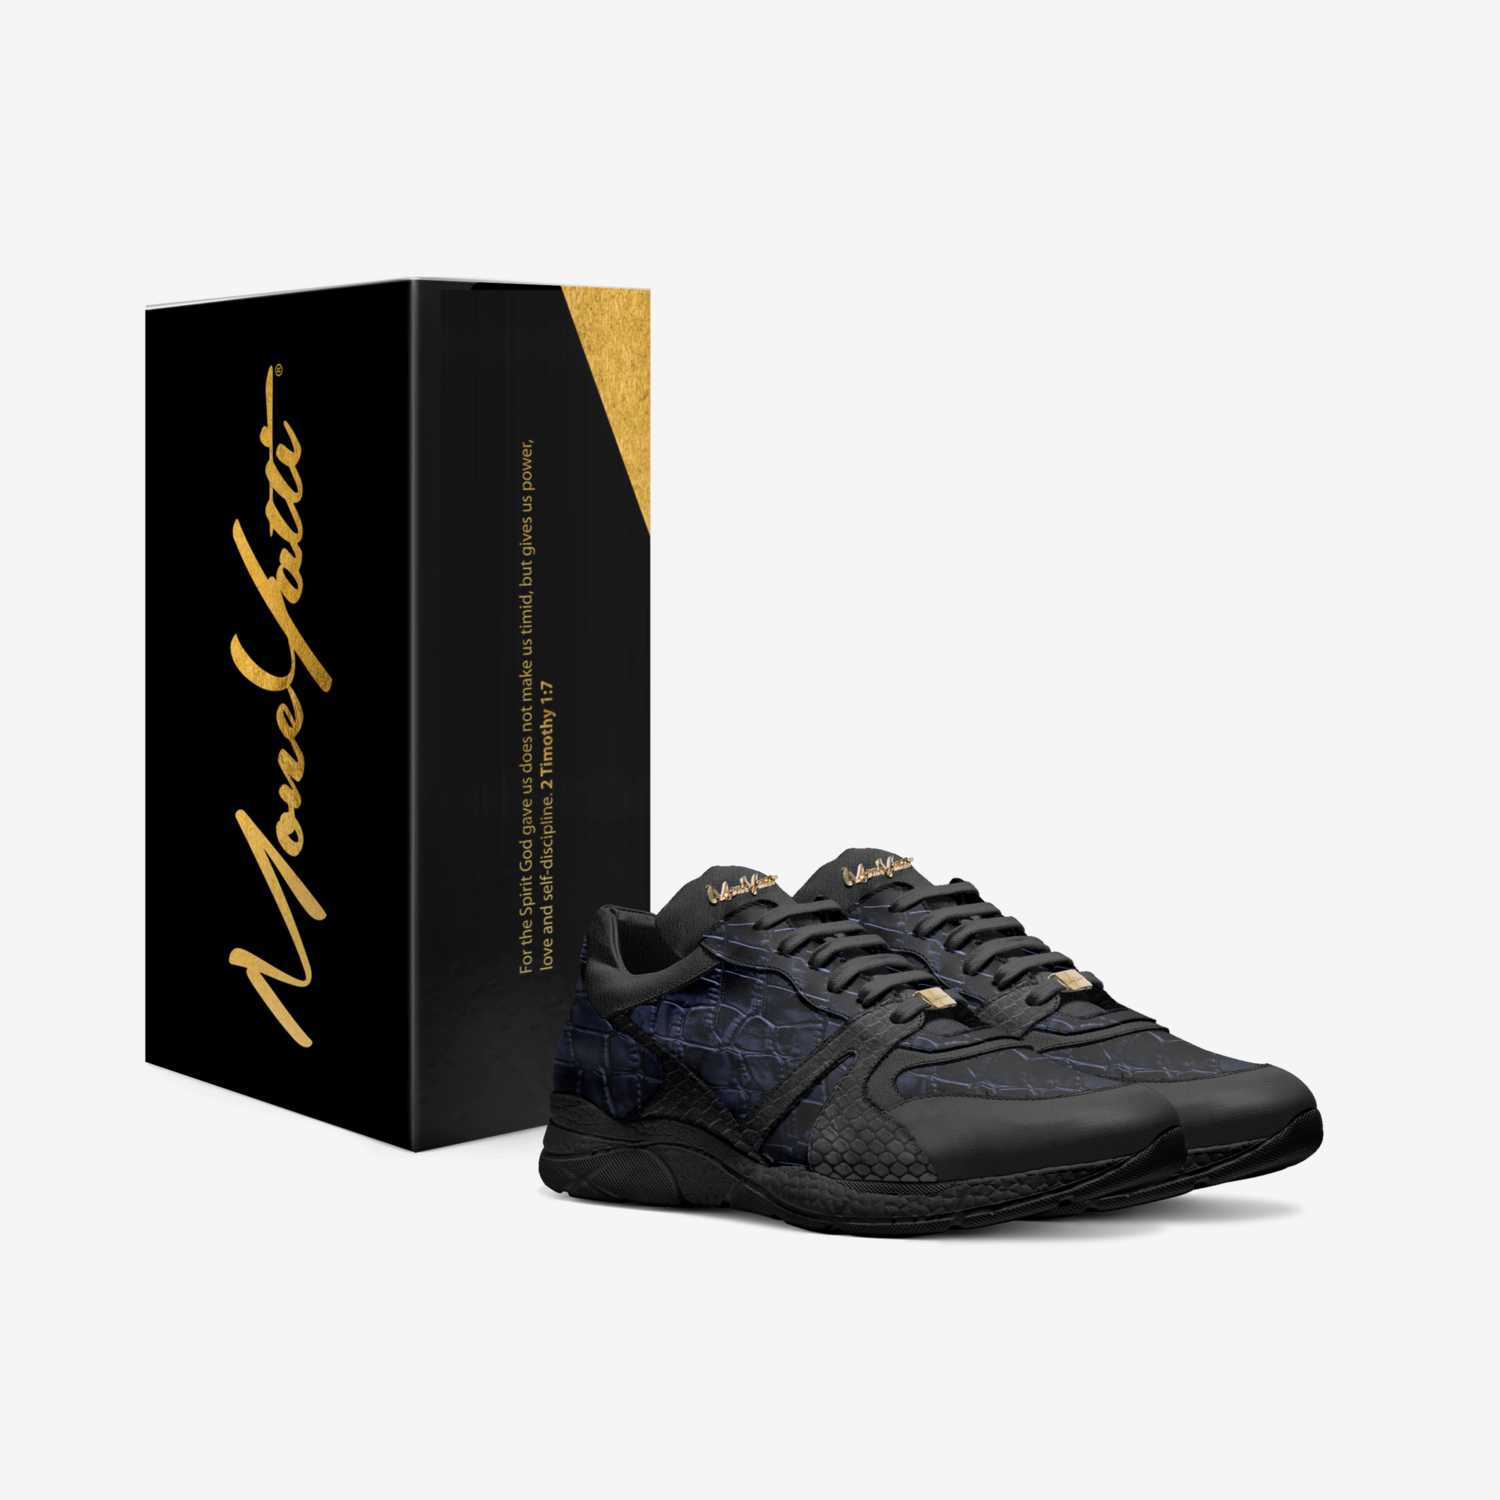 Nem P55 custom made in Italy shoes by Moneyatti Brand | Box view